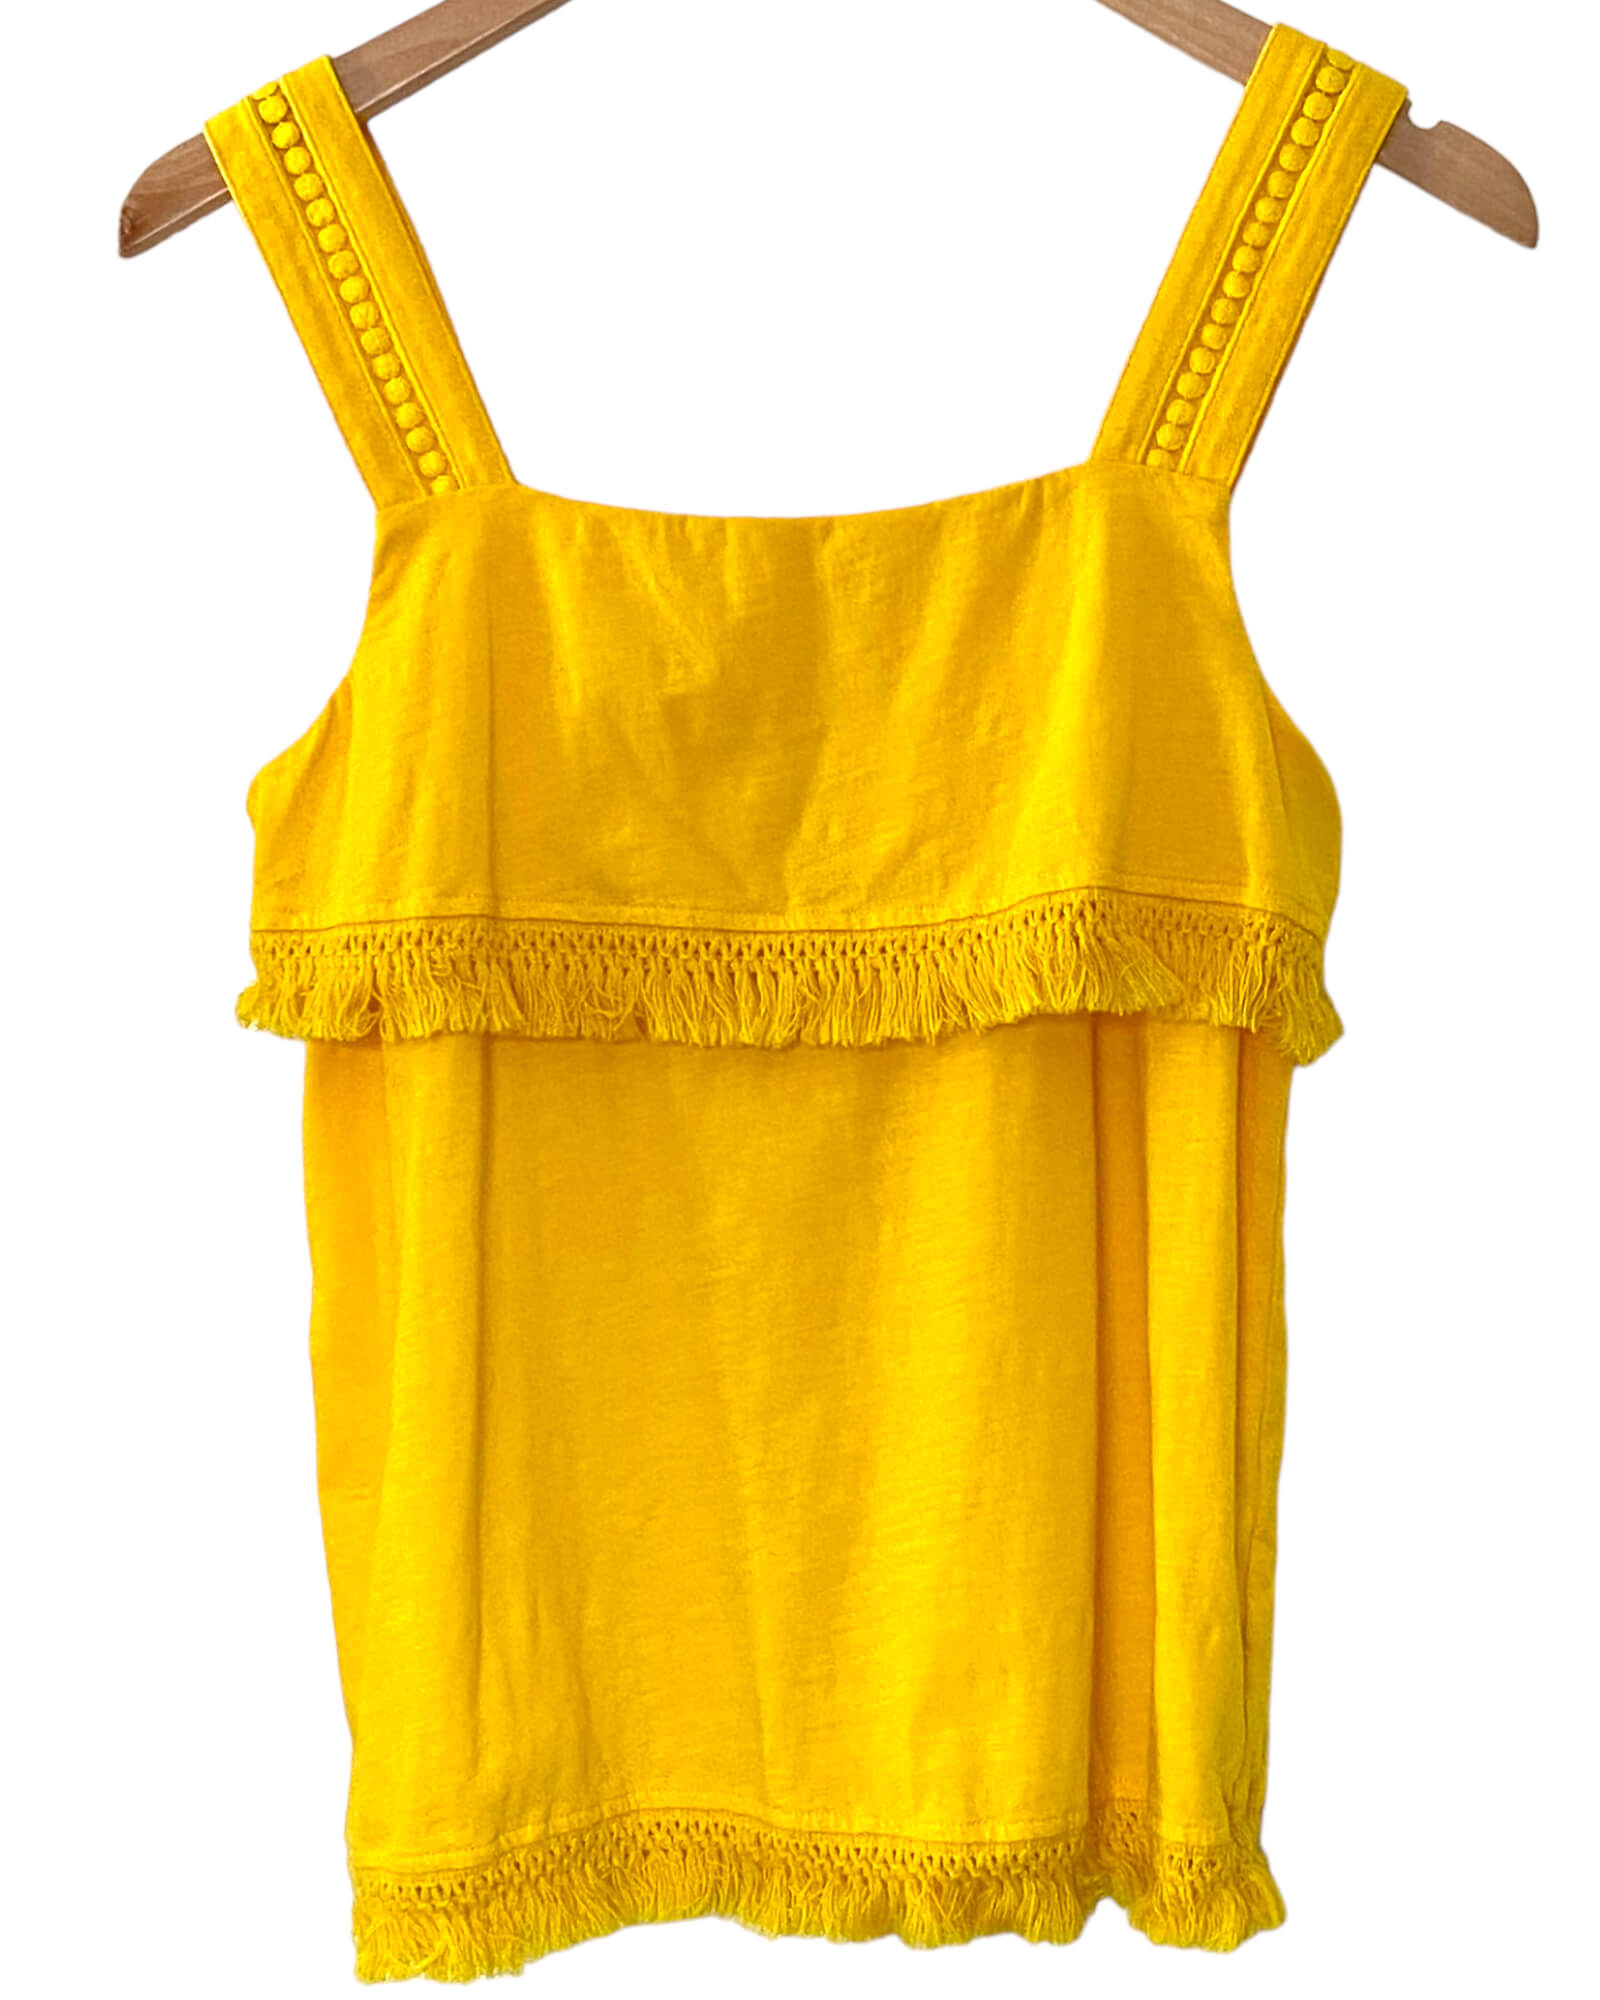 Bright Spring J.CREW sunshine yellow crochet fringe top